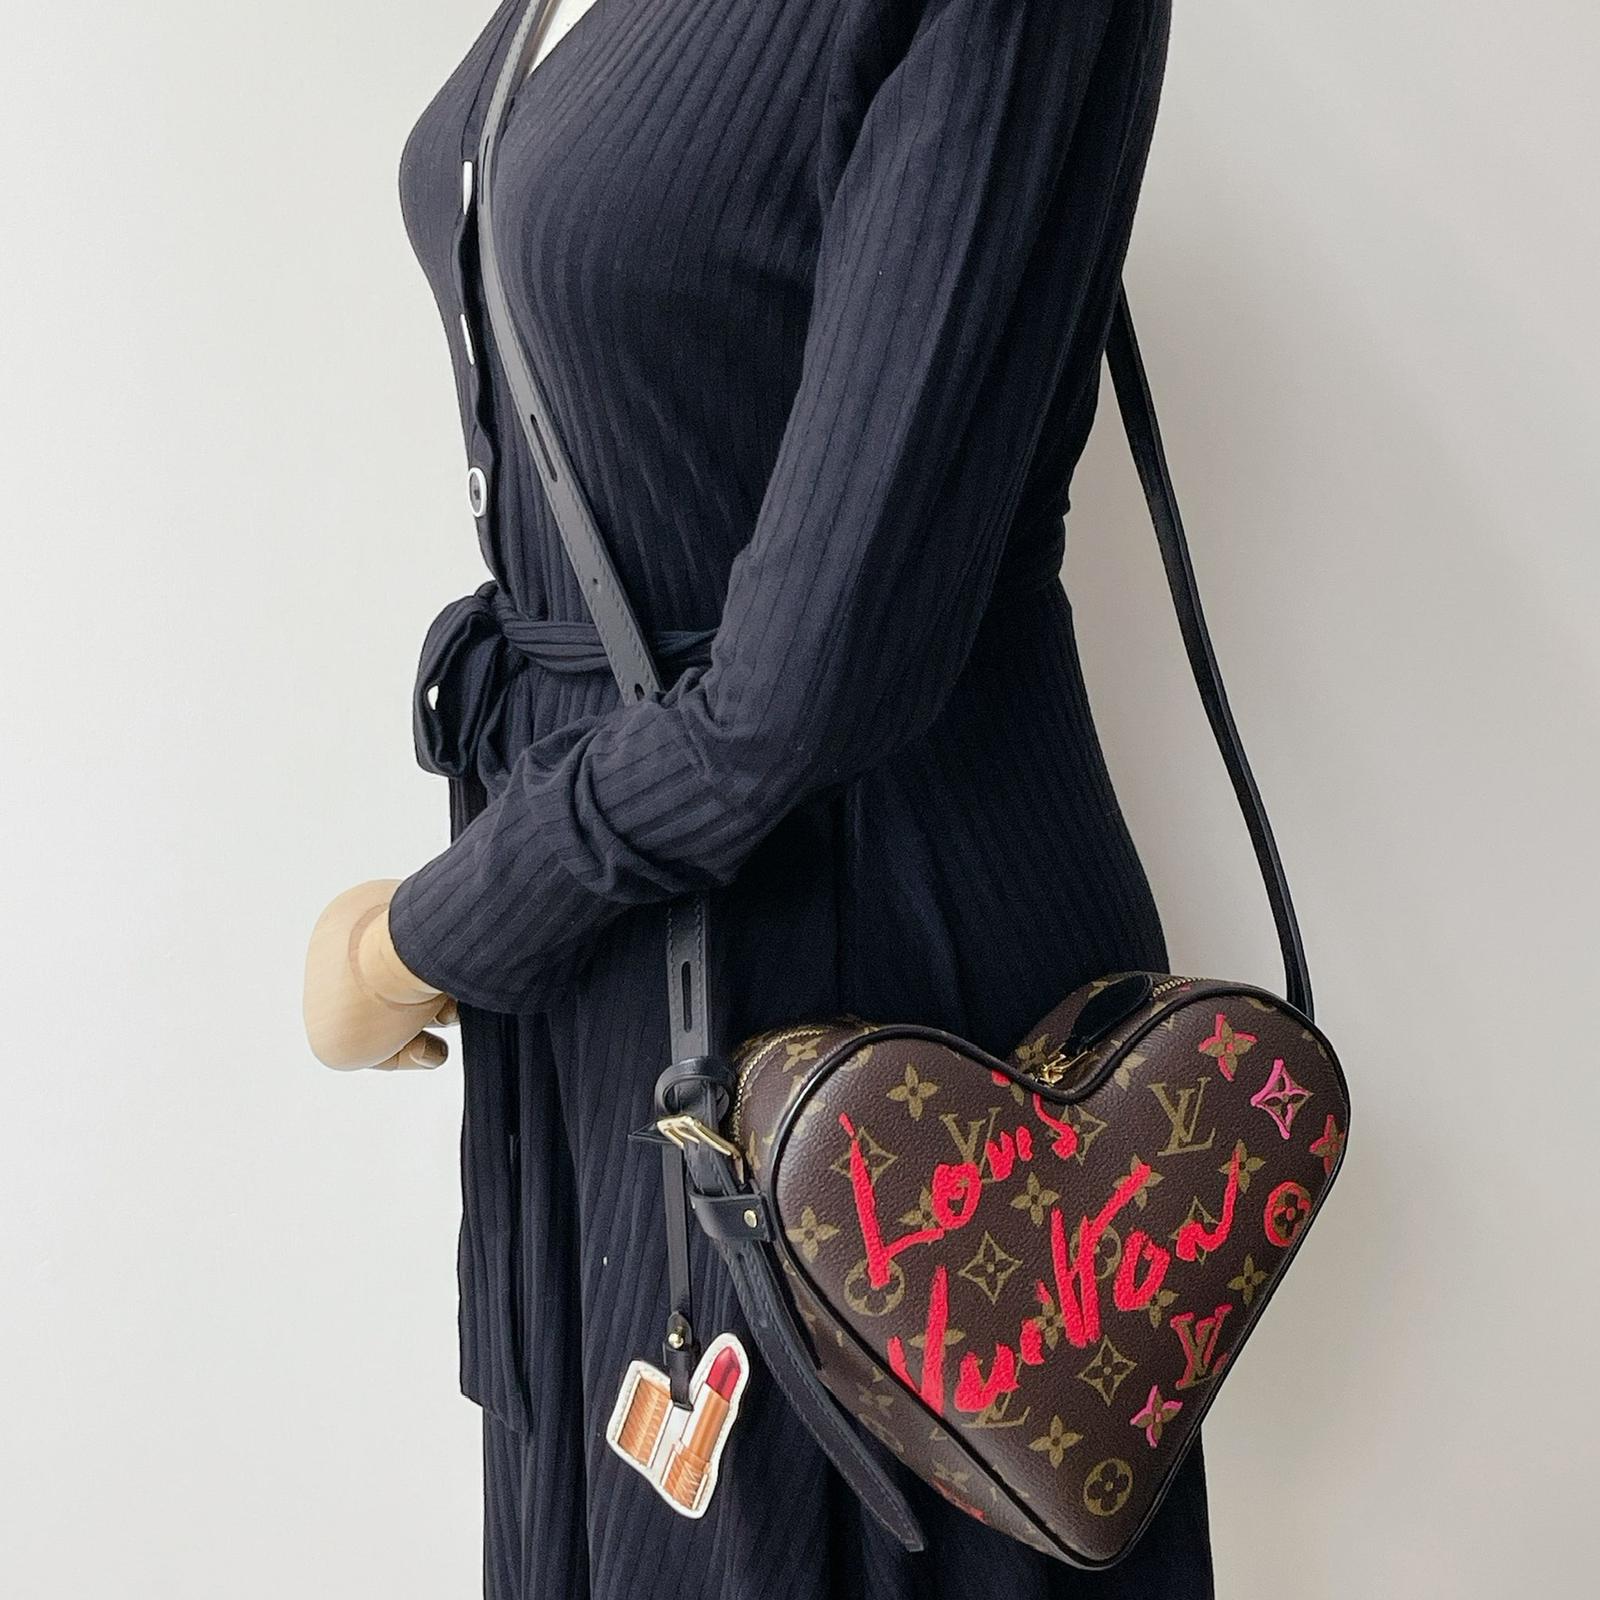 Leather & Louis Vuitton Love - Meagan's Moda